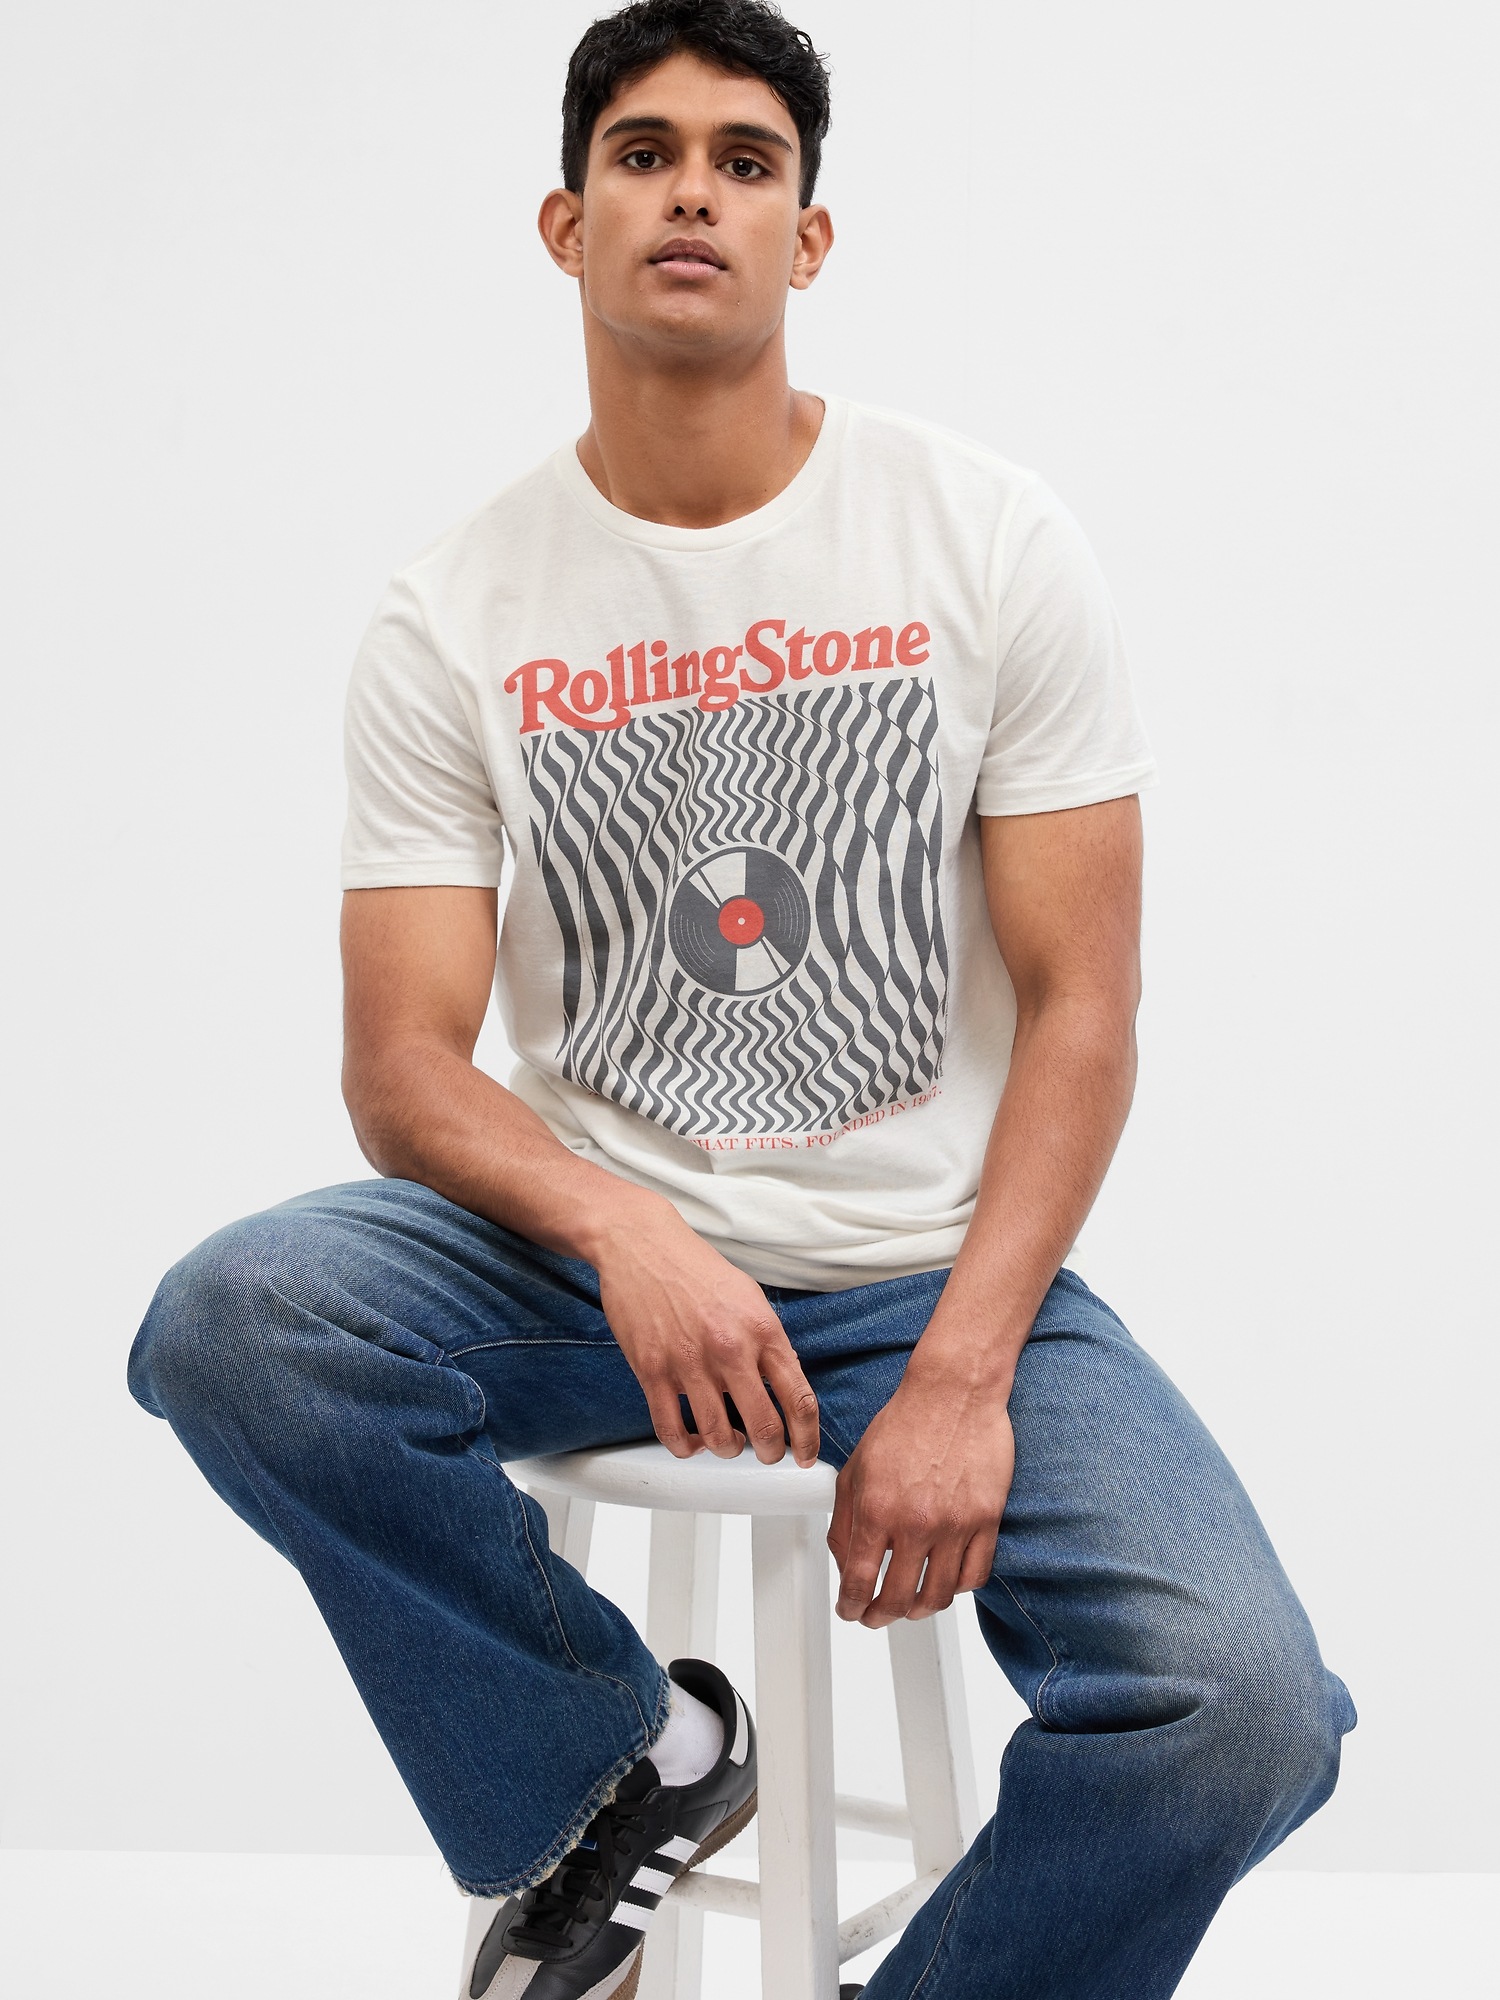 kaustisk i går sund fornuft Rolling Stone™ Graphic T-Shirt | Gap Factory